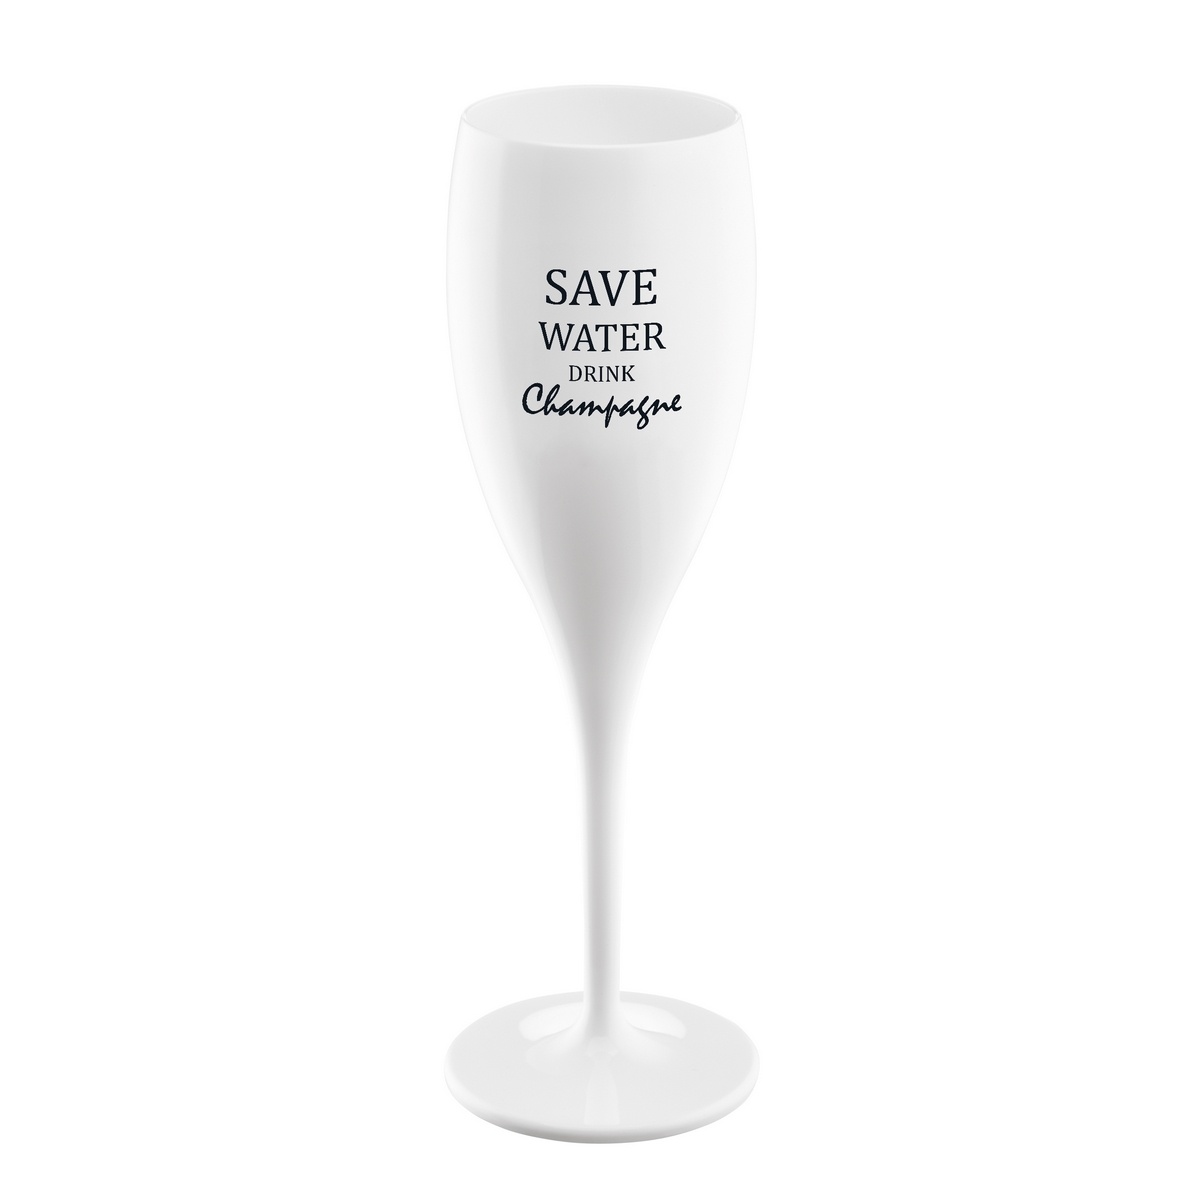 Koziol Sklenice s nápisem Save water drink champagne